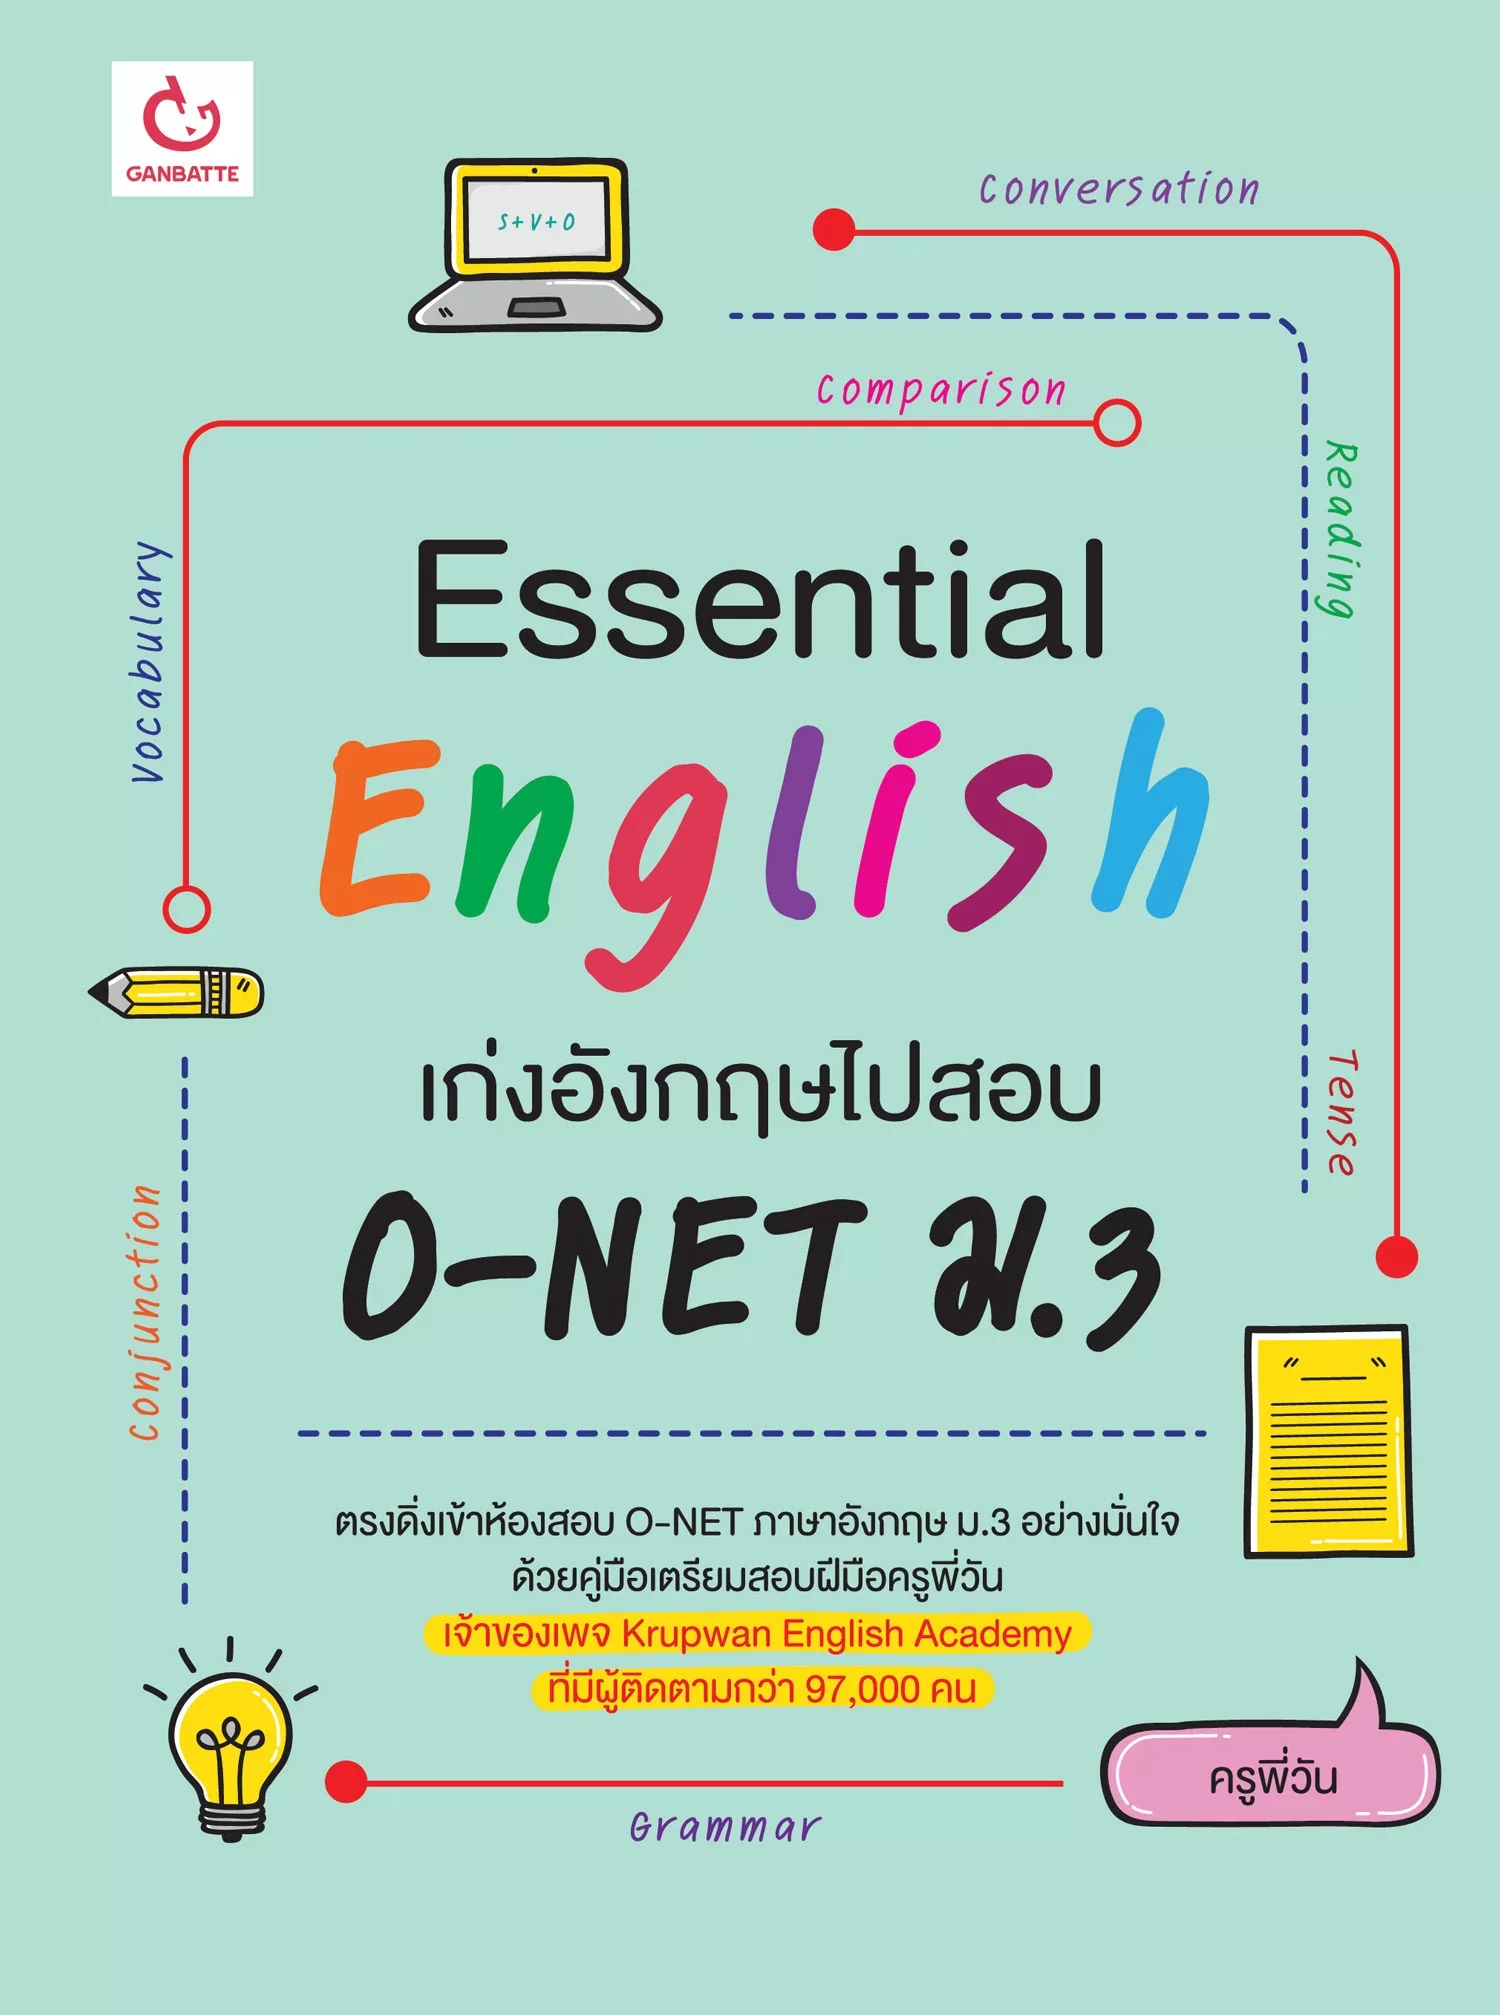 Essential English เก่งอังกฤษไปสอบ O-NET ม.3